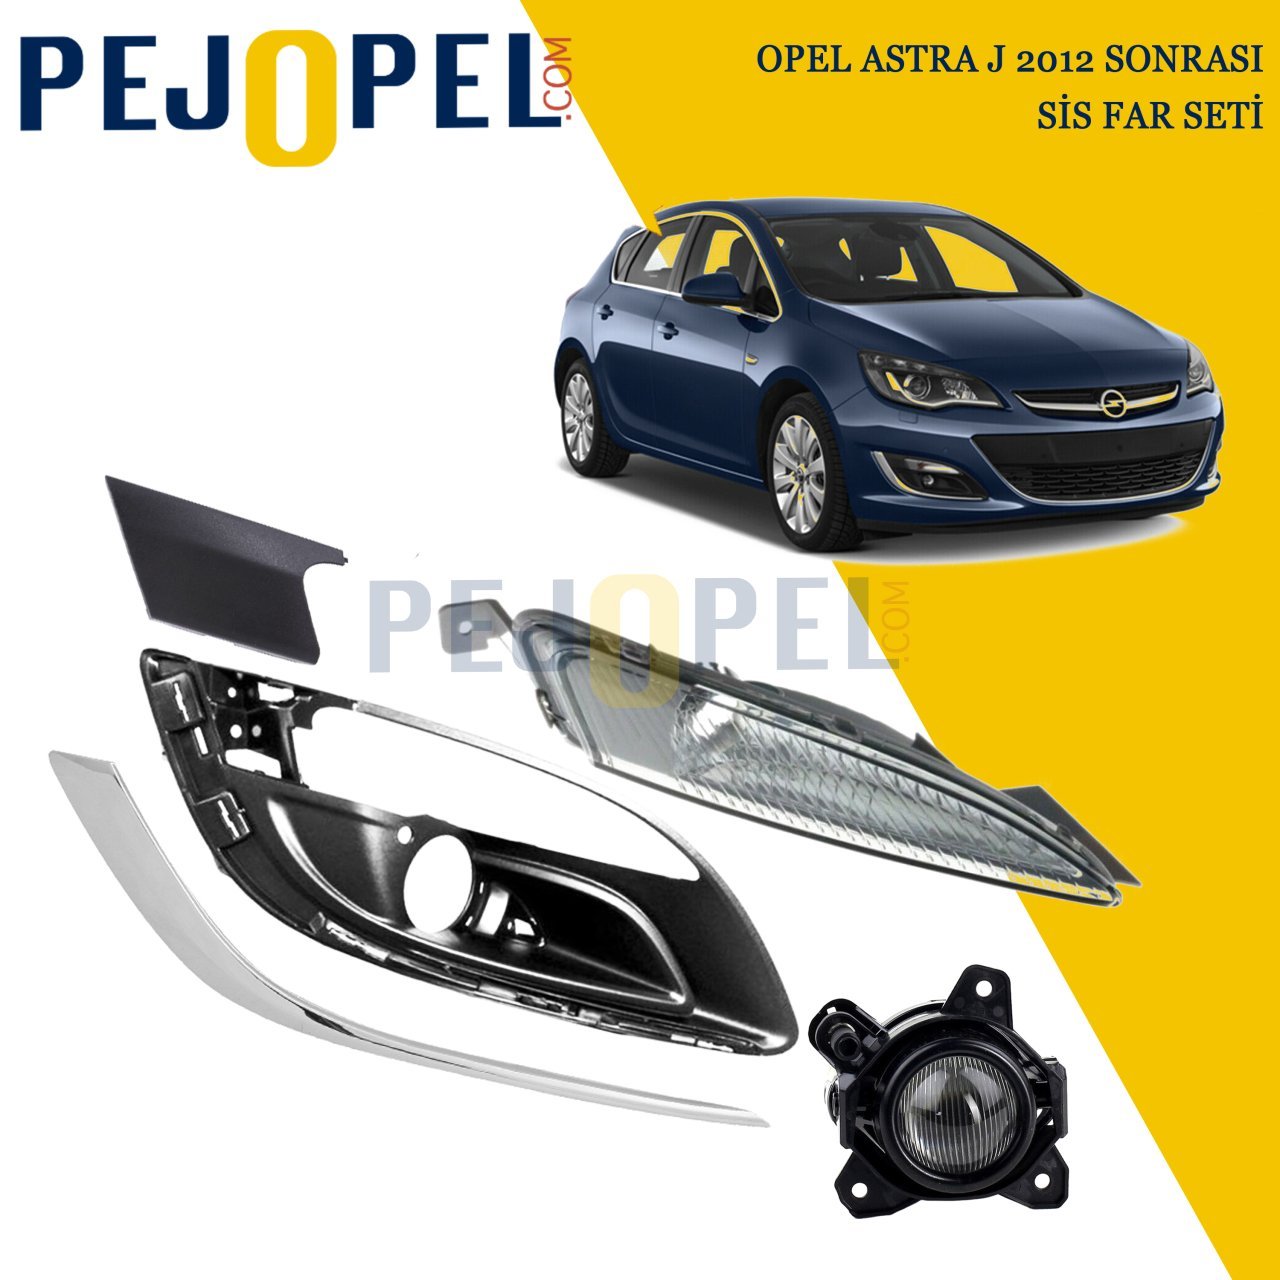 Opel Astra j  2012 Sonrası Sis Far Seti - İthal & Orjinal